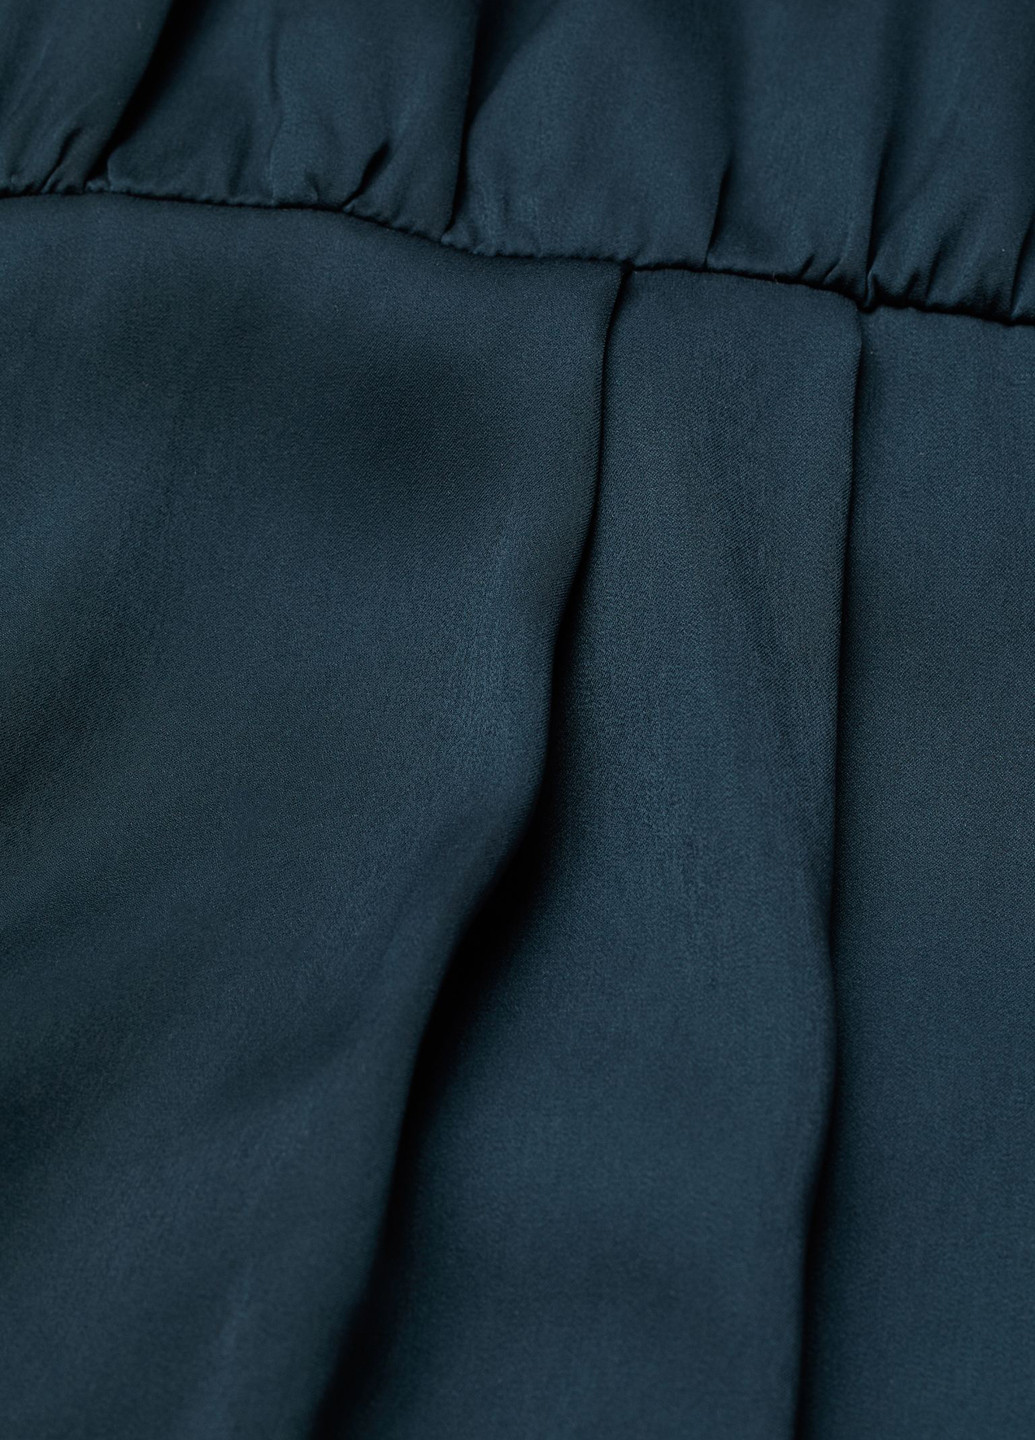 Комбинезон H&M комбинезон-брюки однотонный тёмно-синий кэжуал атлас, полиэстер